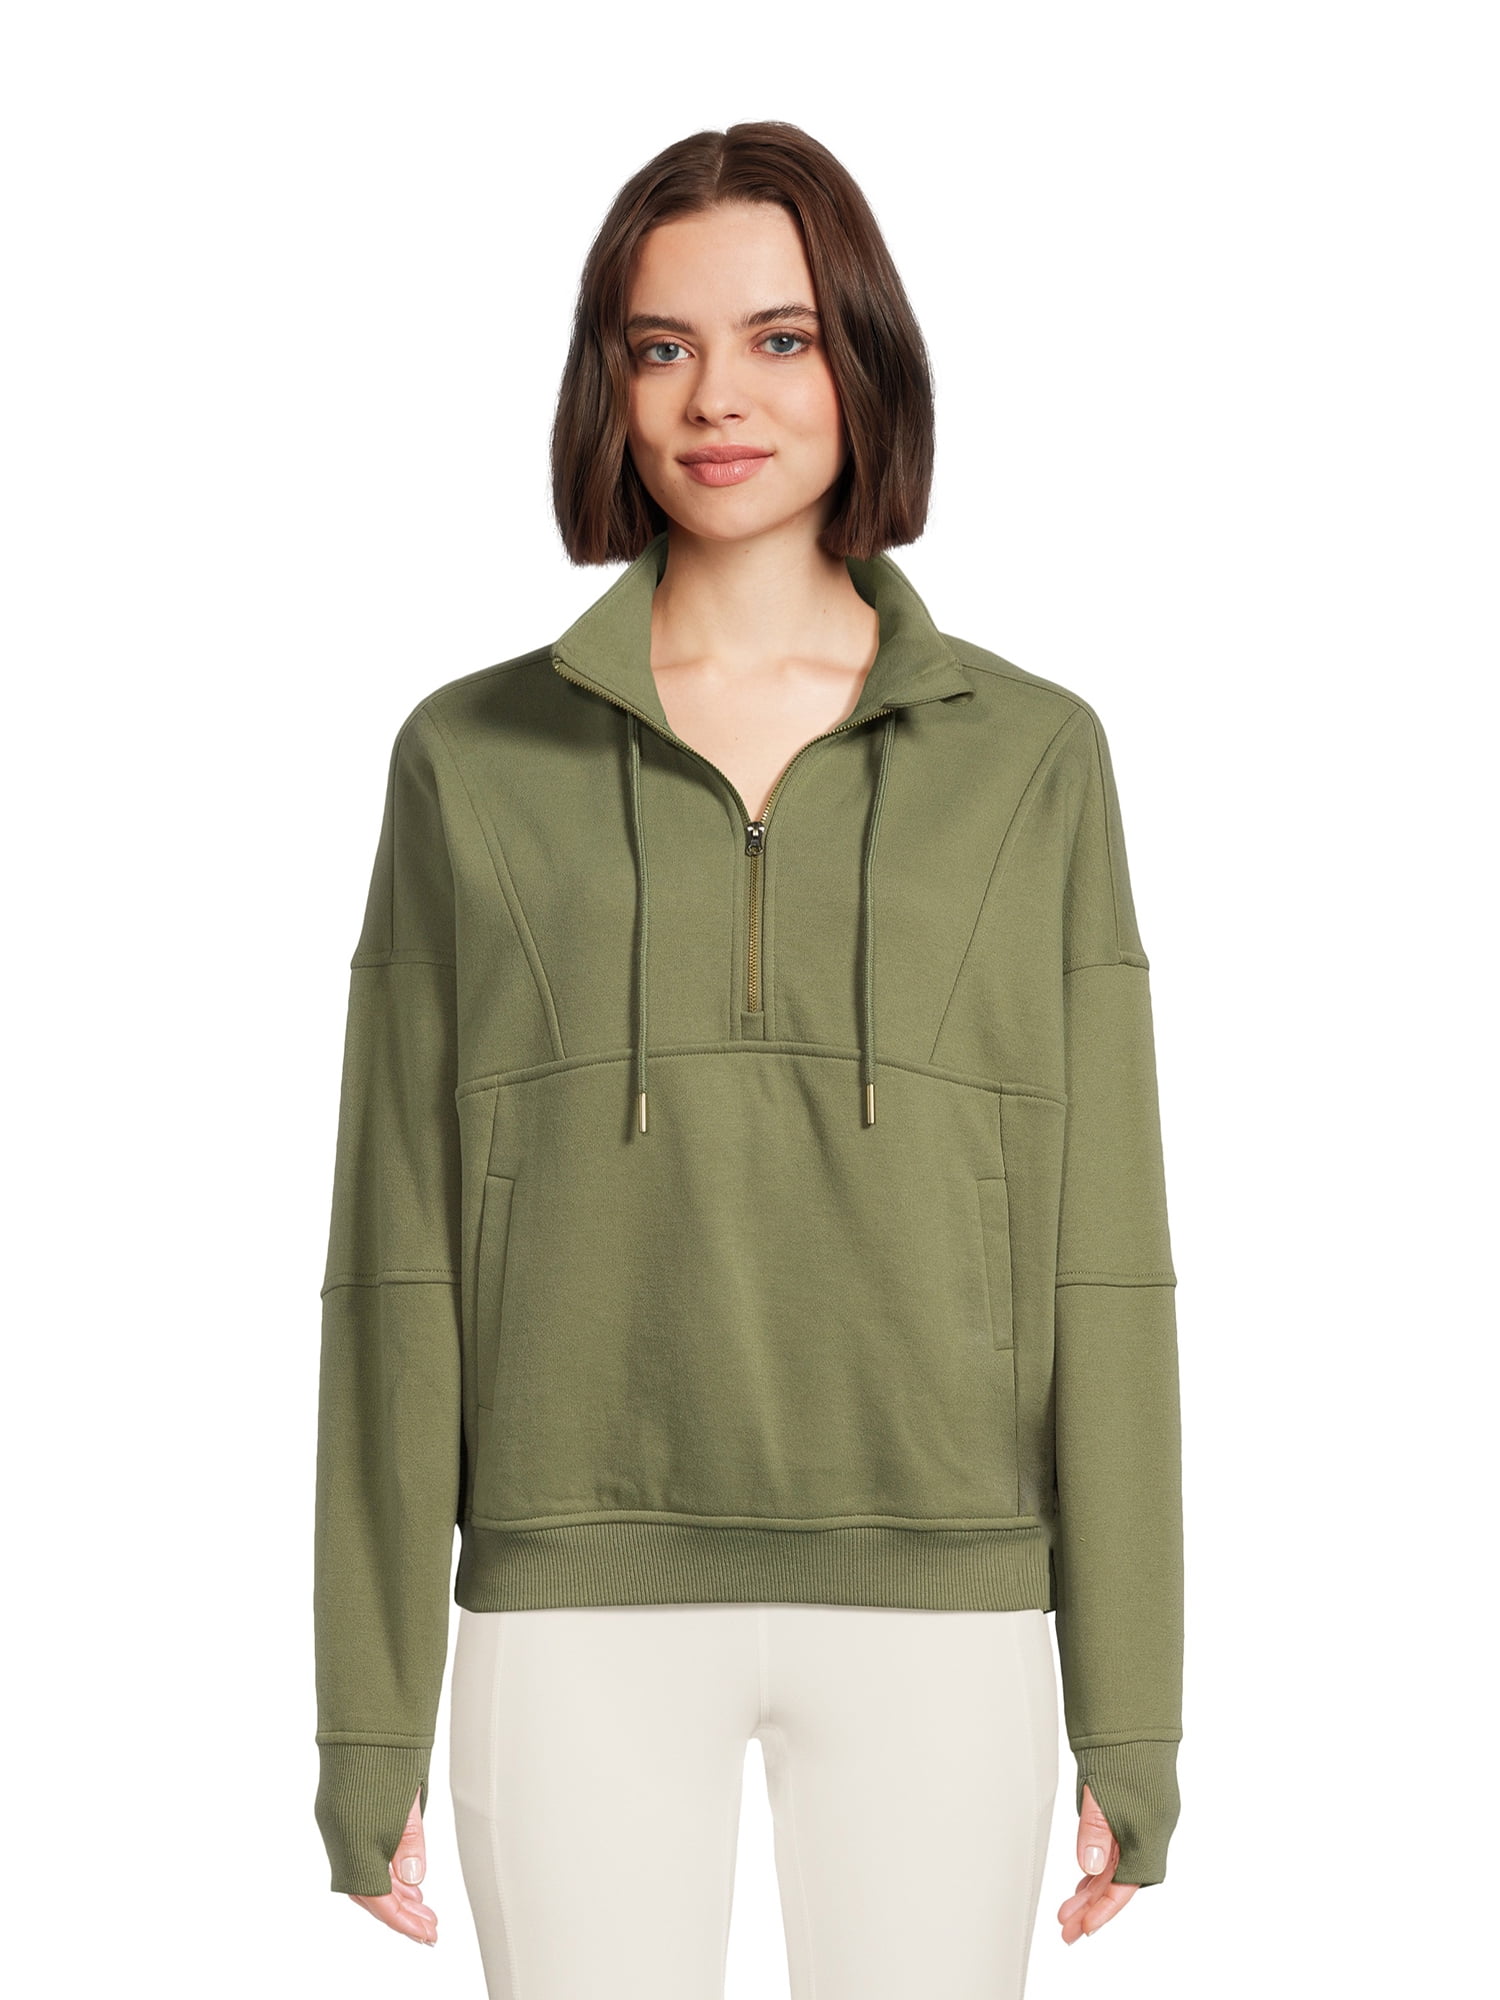 Avia Women's Quarter Zip Pullover, Sizes XS-XXXL 